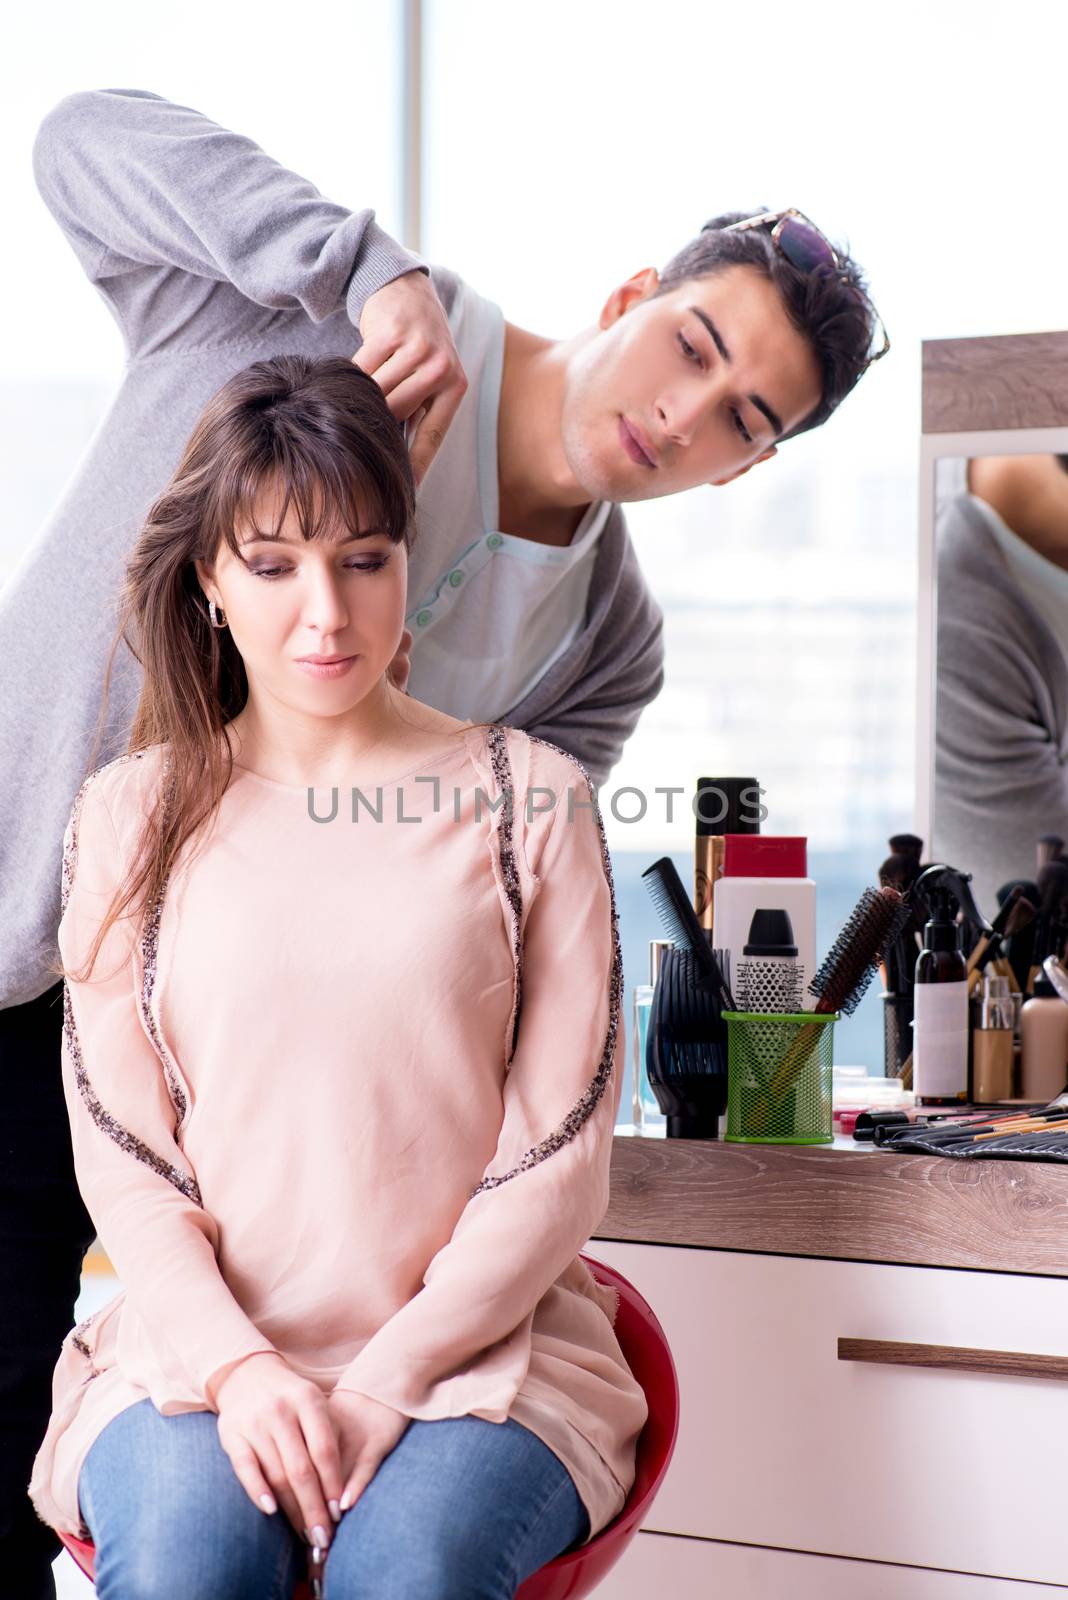 Man stylist working with woman in beauty salon